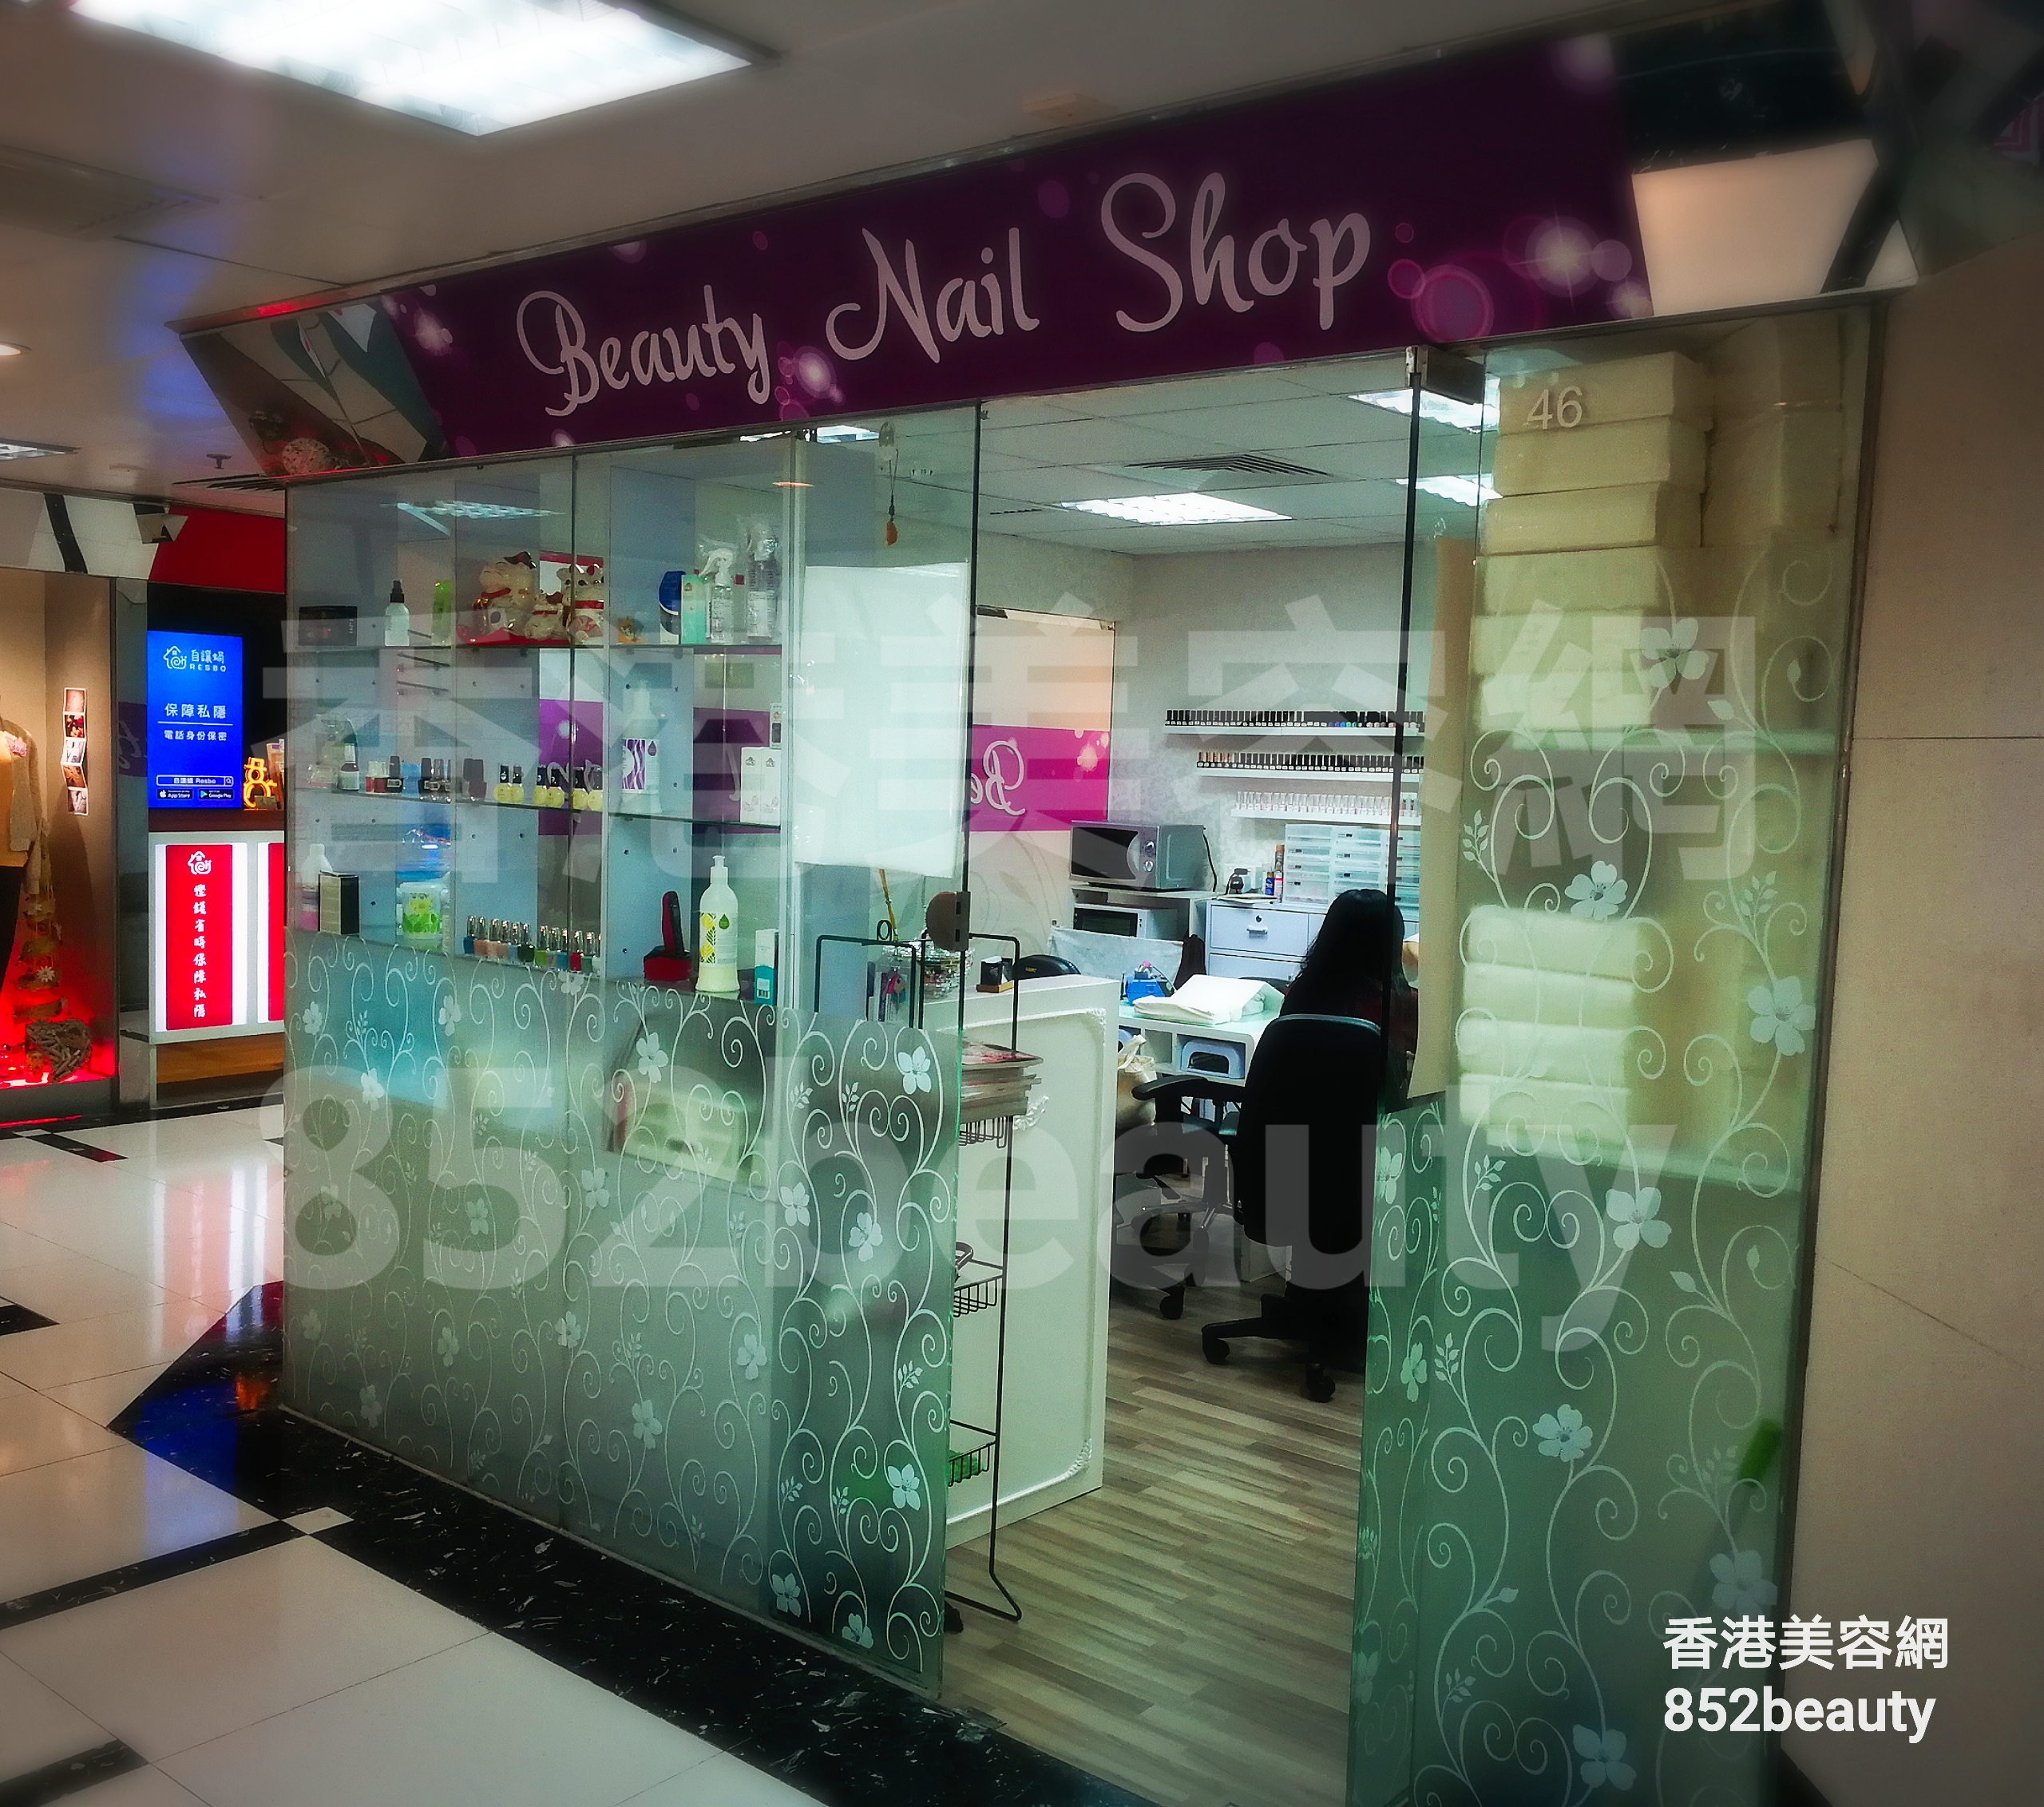 : Beauty Nail Shop